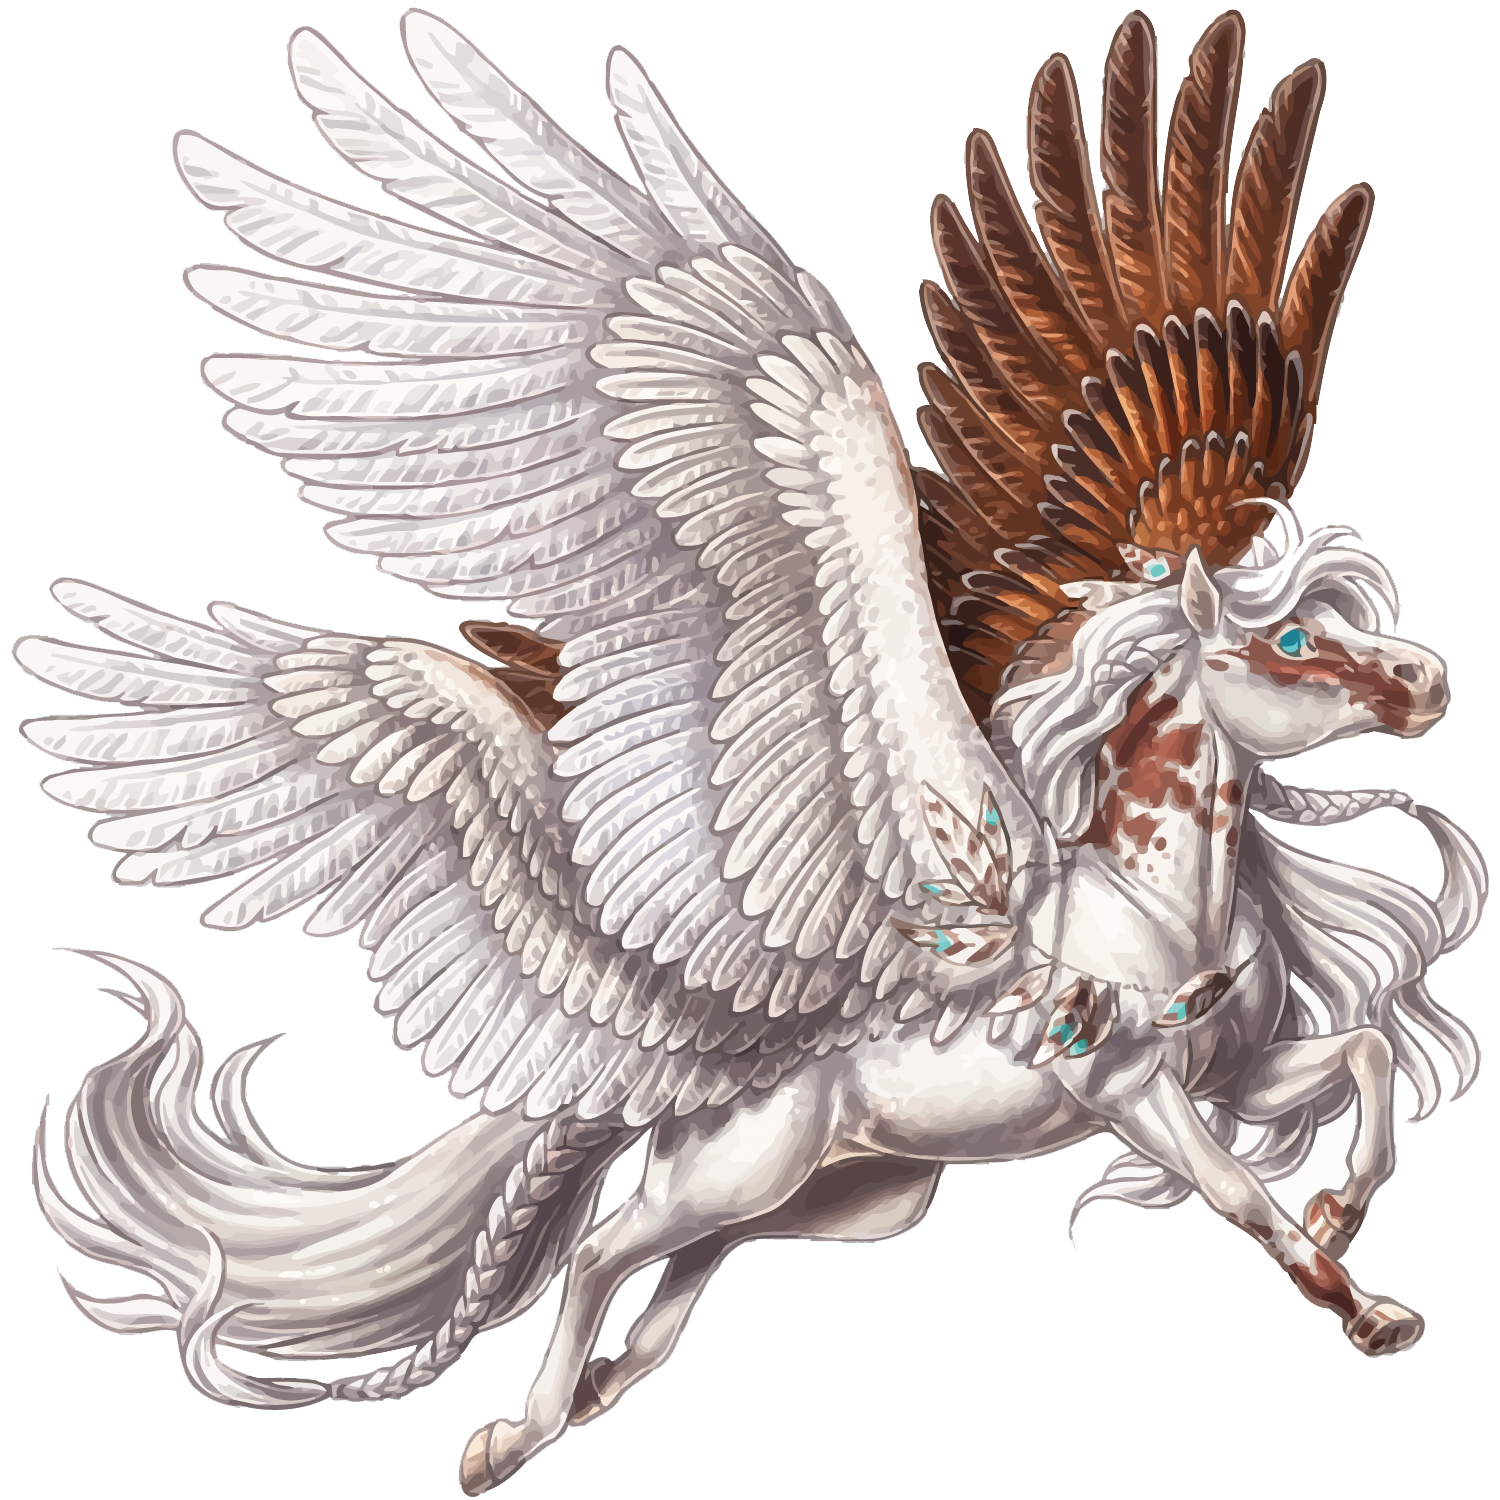 Pegasus PNG High-Quality Image